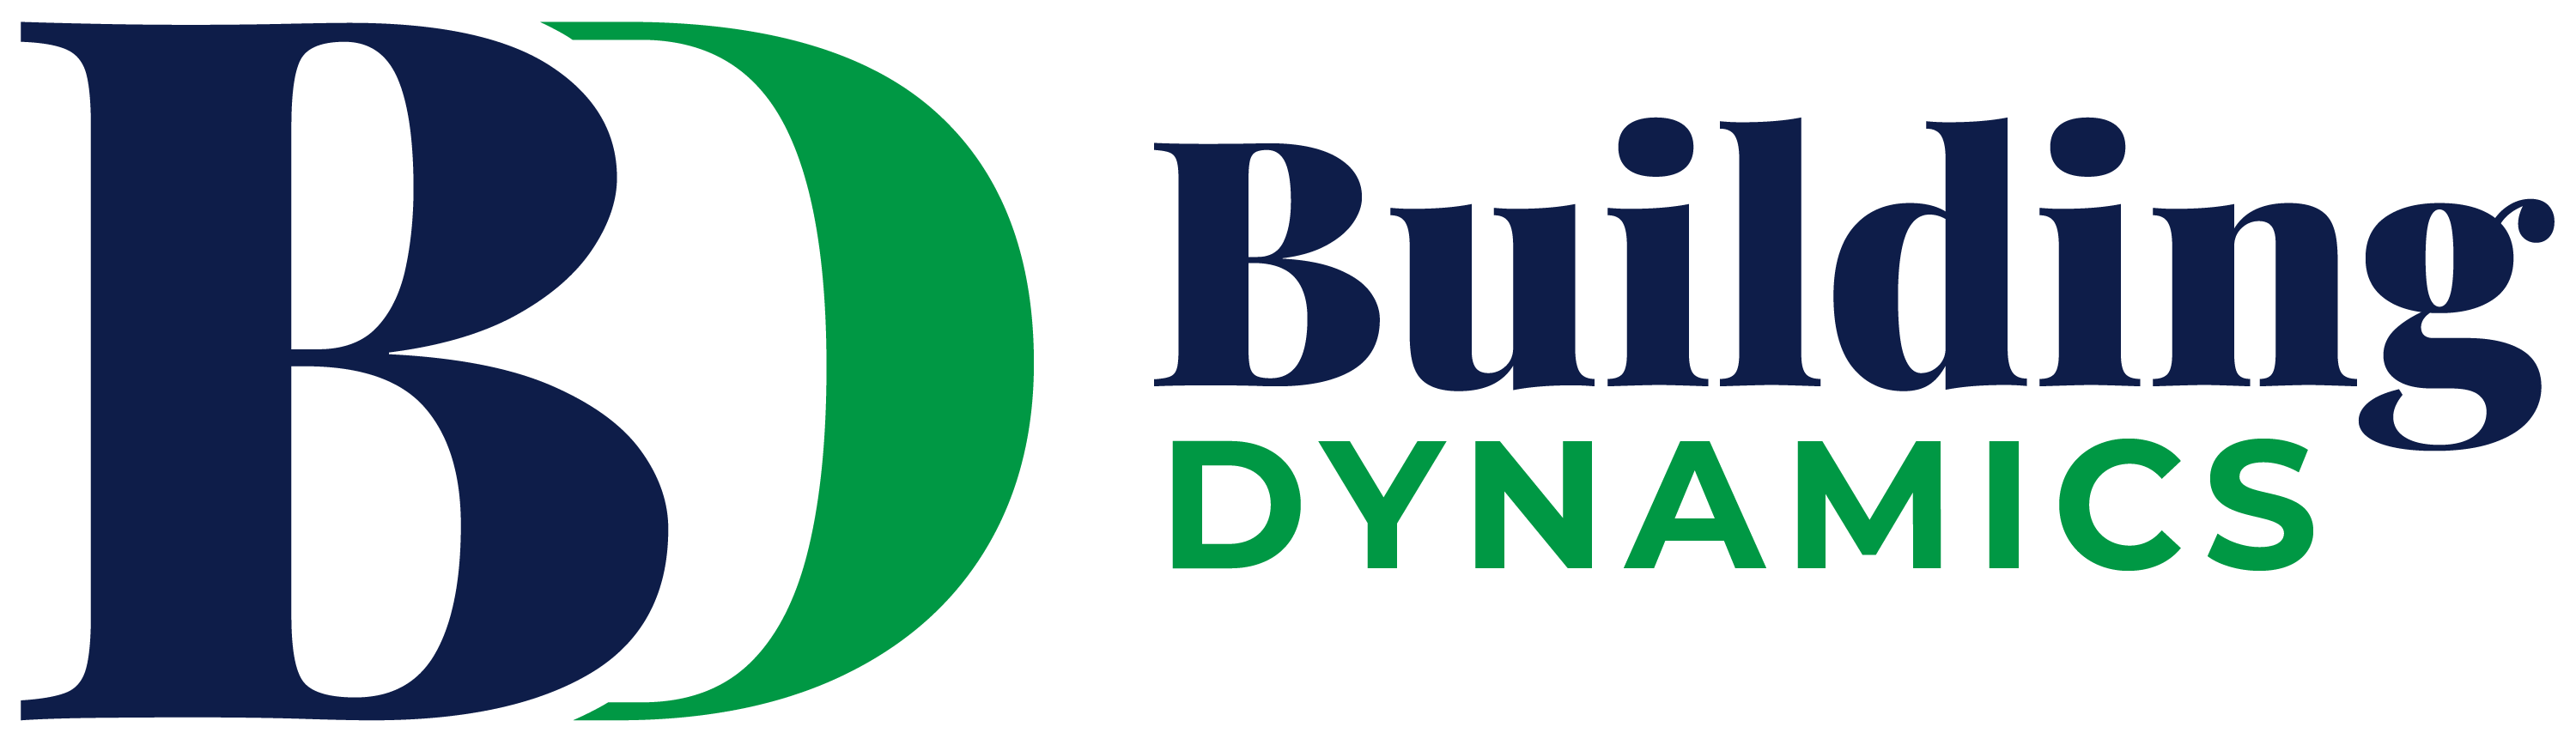 Building Dynamics, LLC